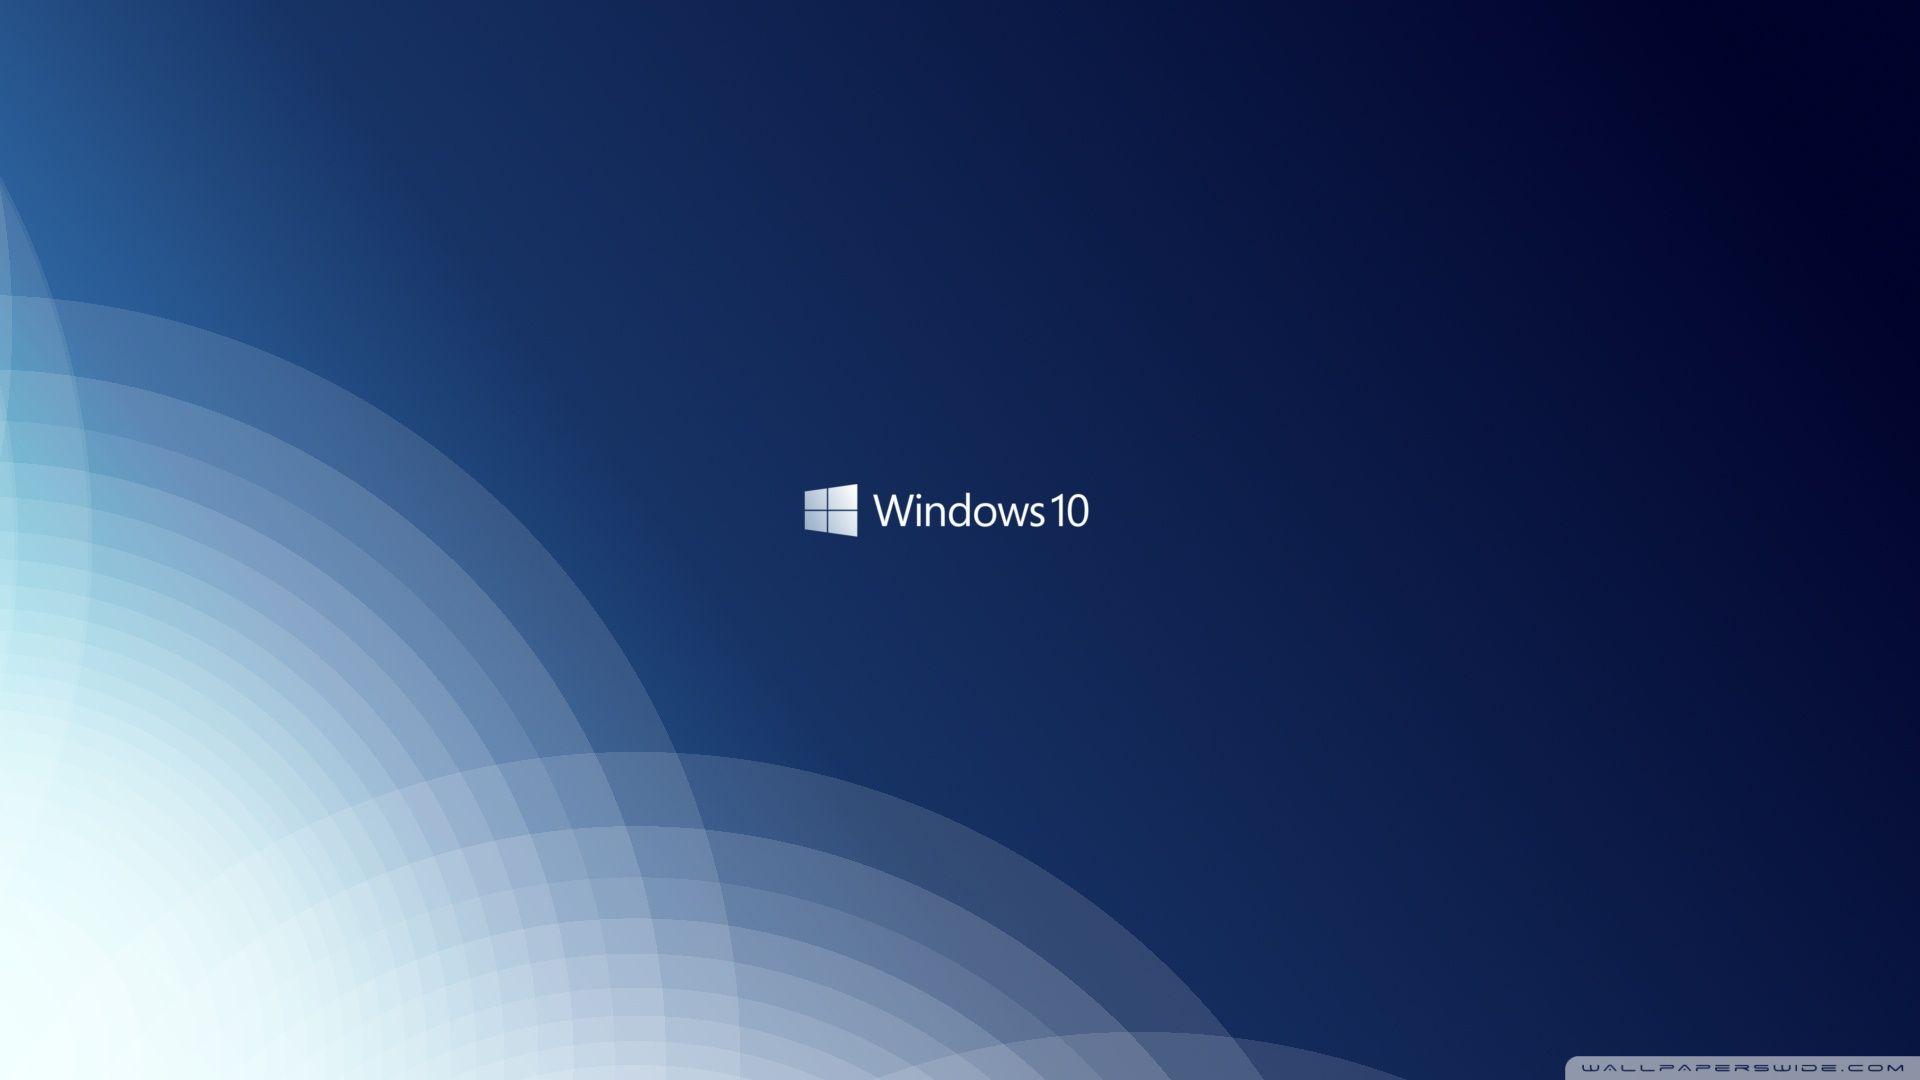 Windows 10 Blue Wallpapers Top Free Windows 10 Blue Backgrounds Wallpaperaccess